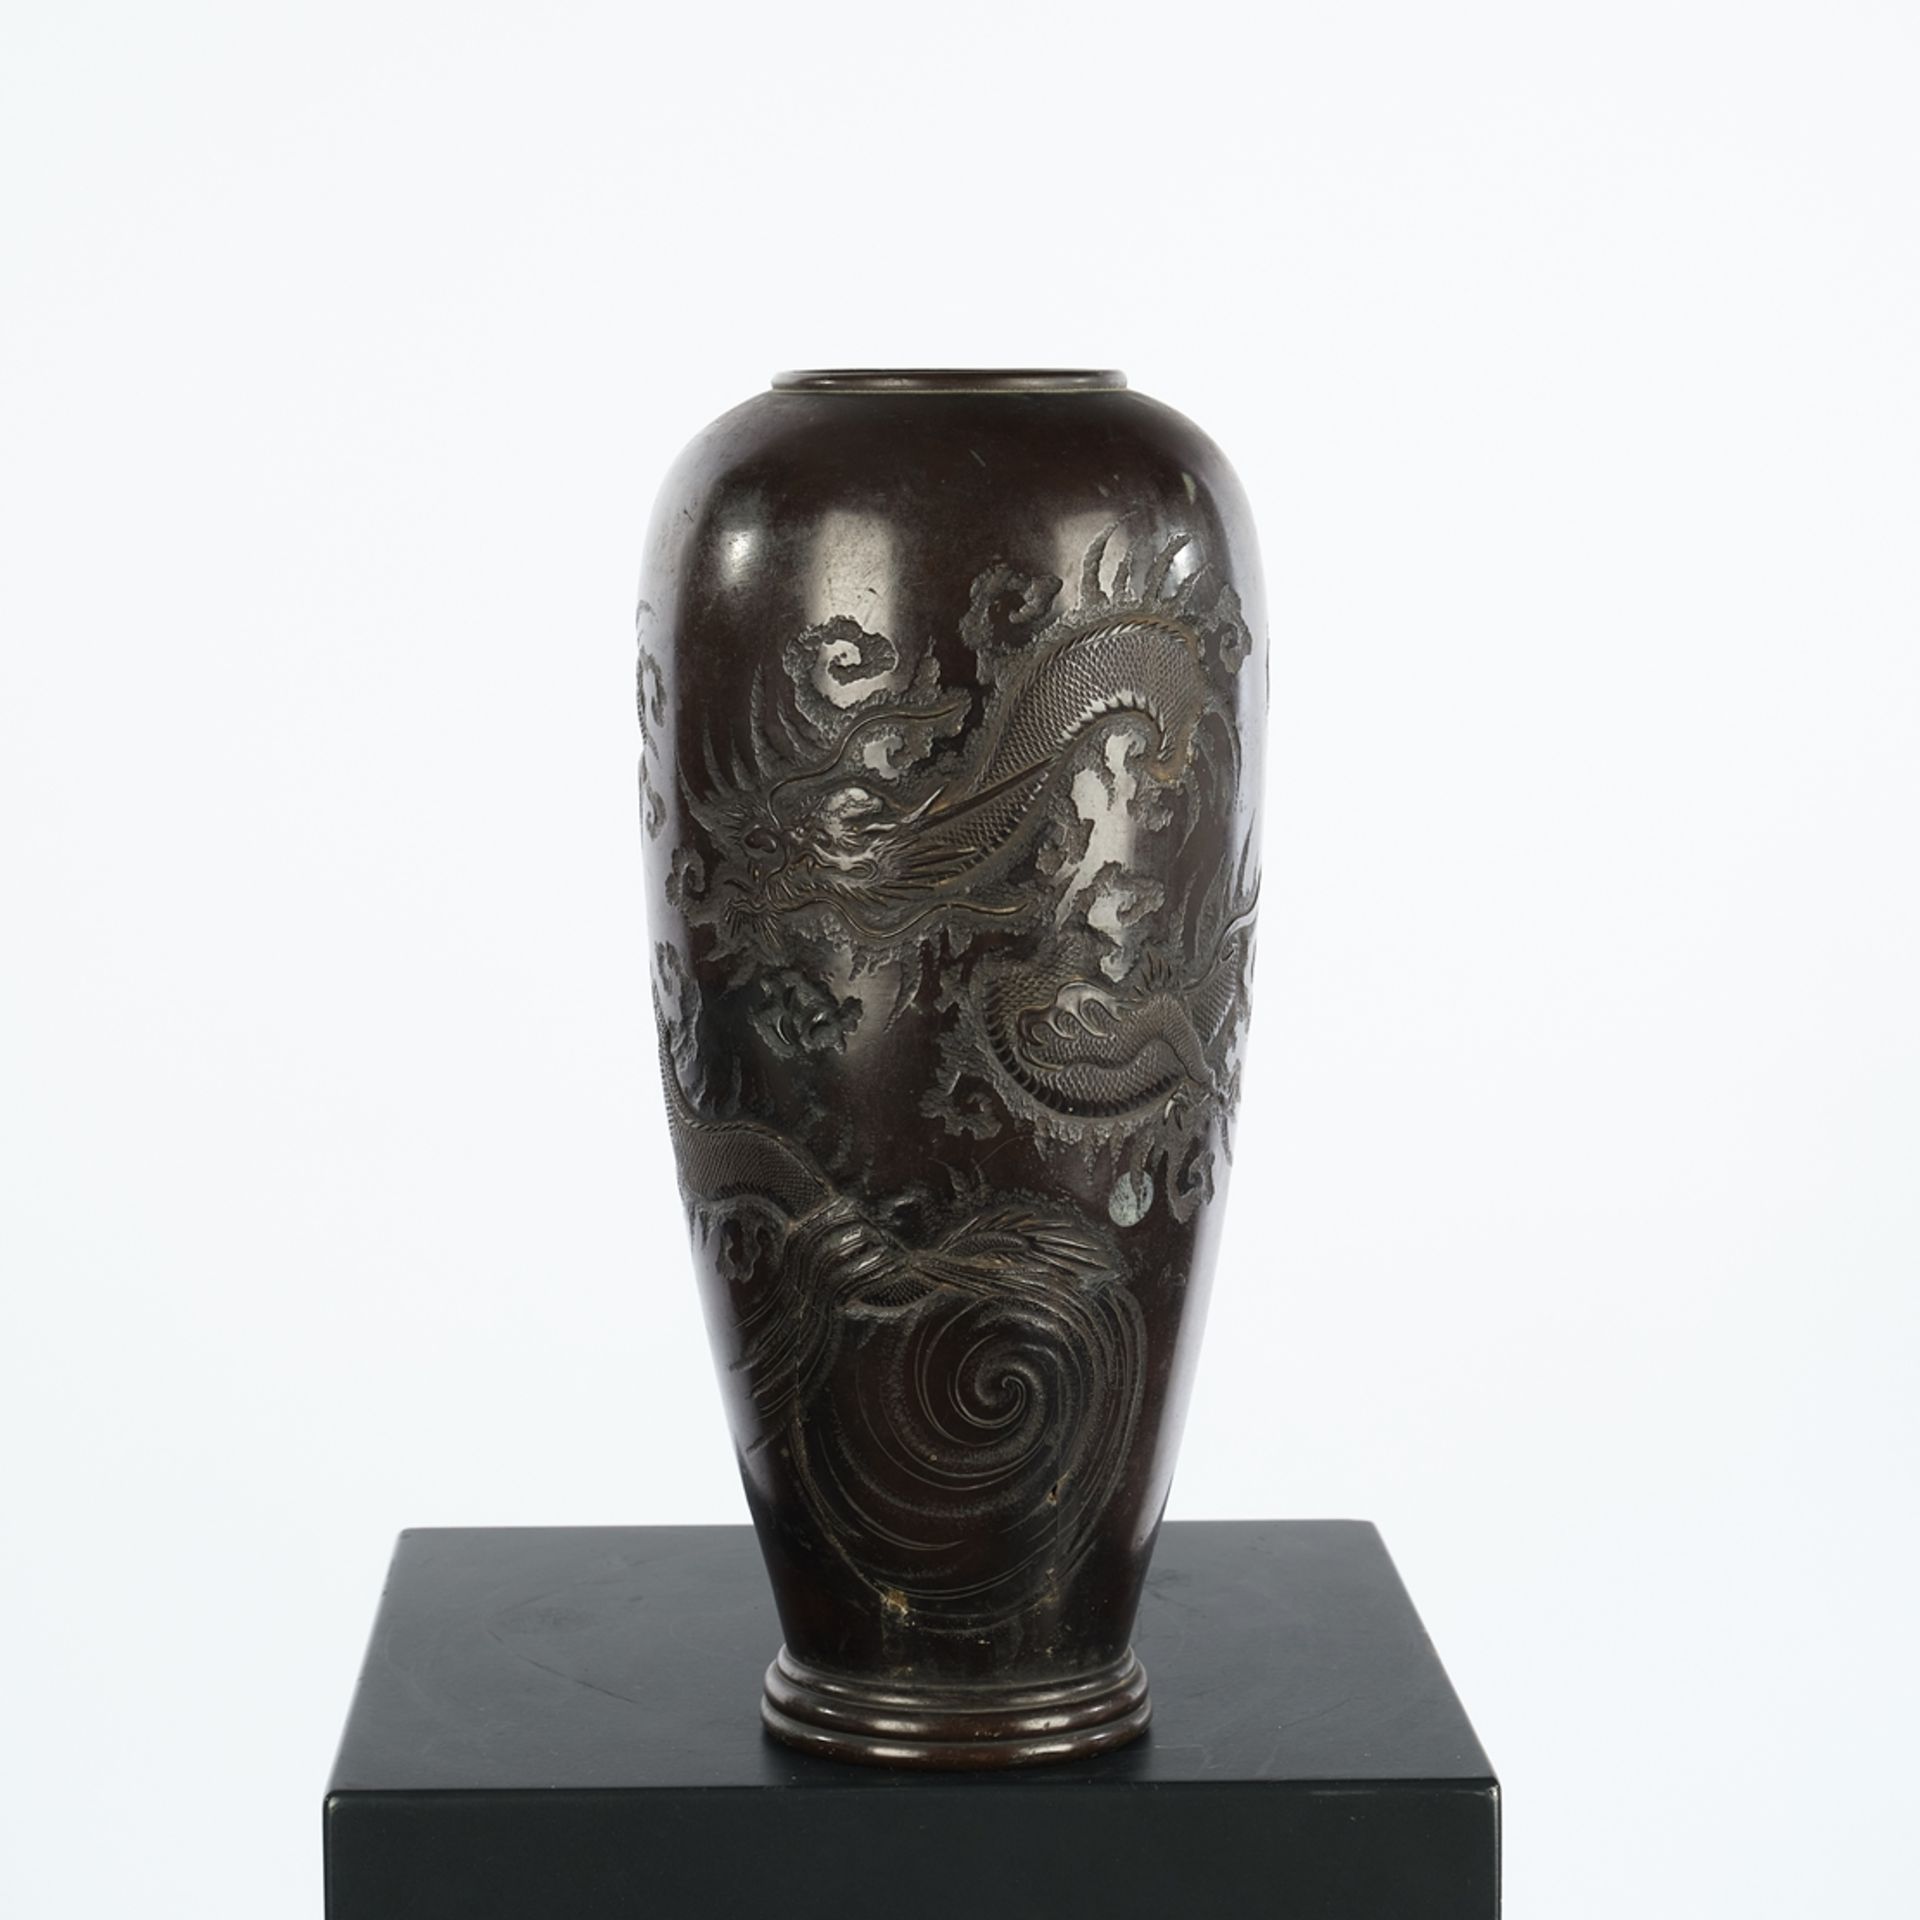 Baluster vase, Japan, 19th century, bronze, brown patina, dragon decoration, 30 cm high, heavily da